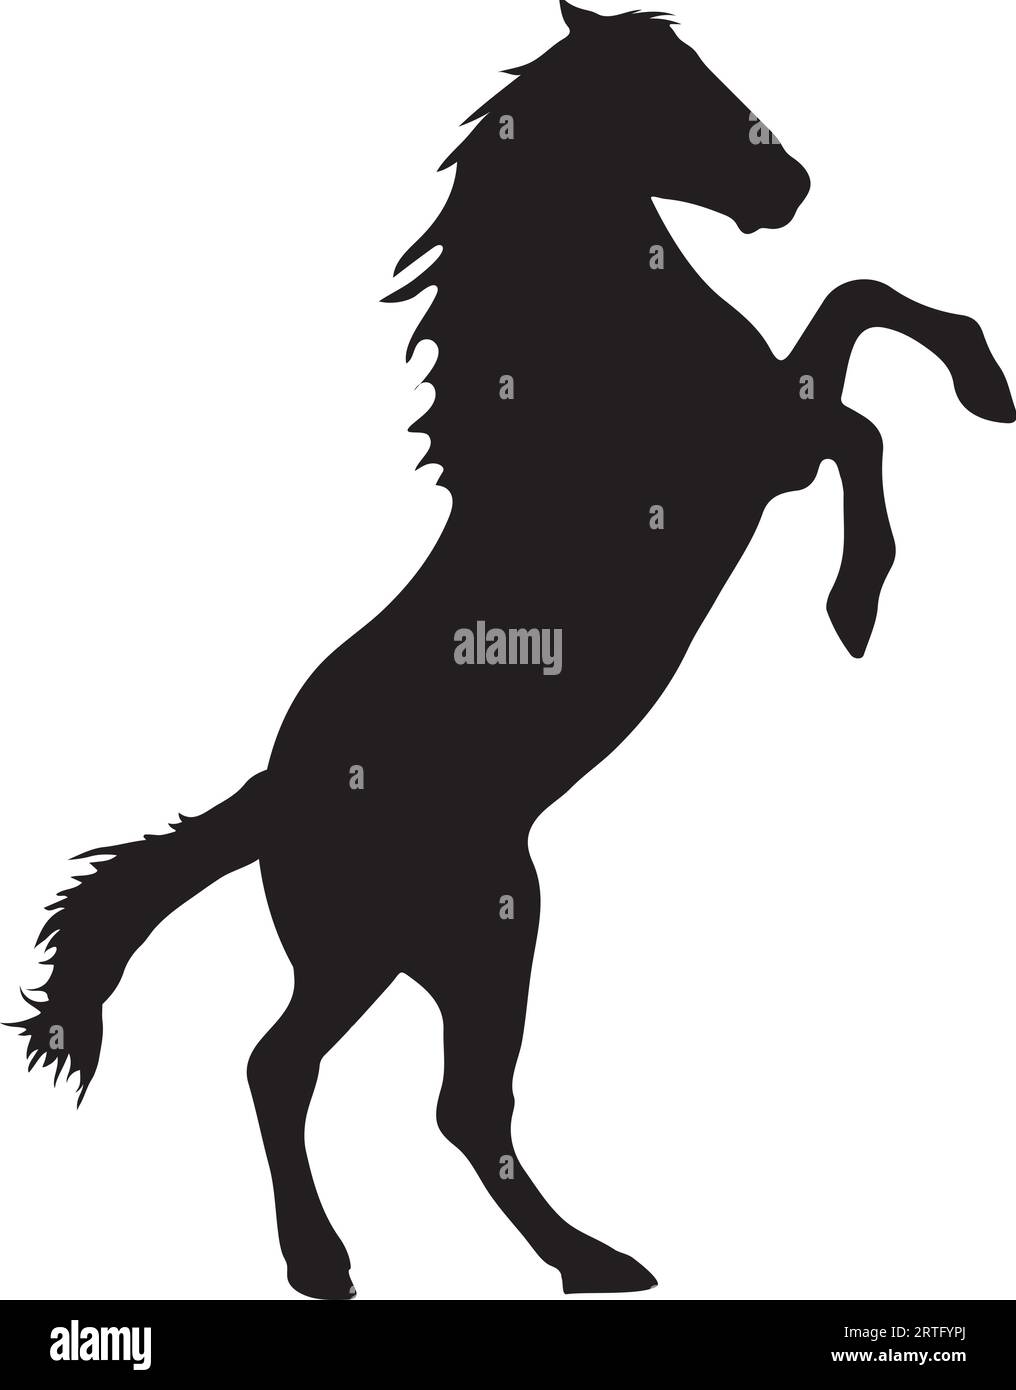 Black horse silhouette, vector or illustration Stock Vector